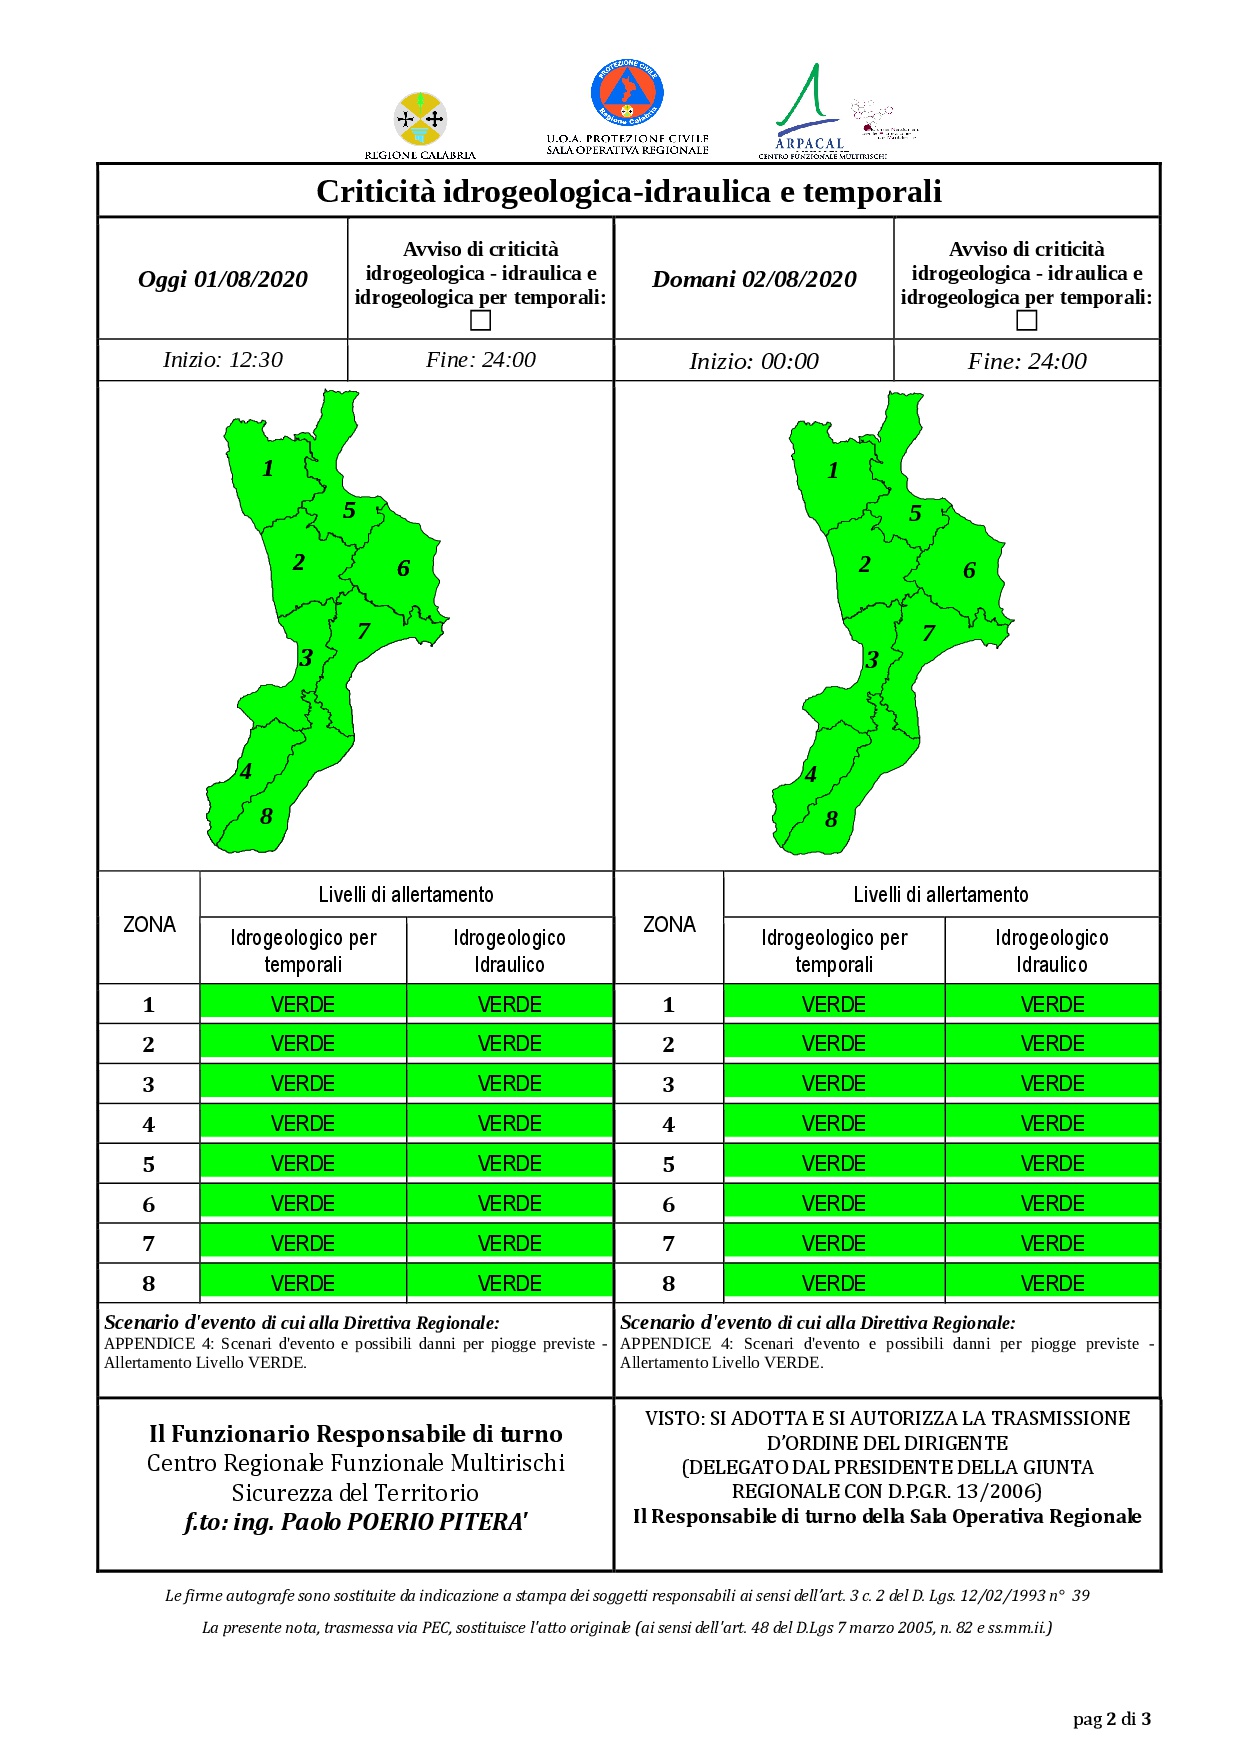 Criticità idrogeologica-idraulica e temporali in Calabria 01-08-2020